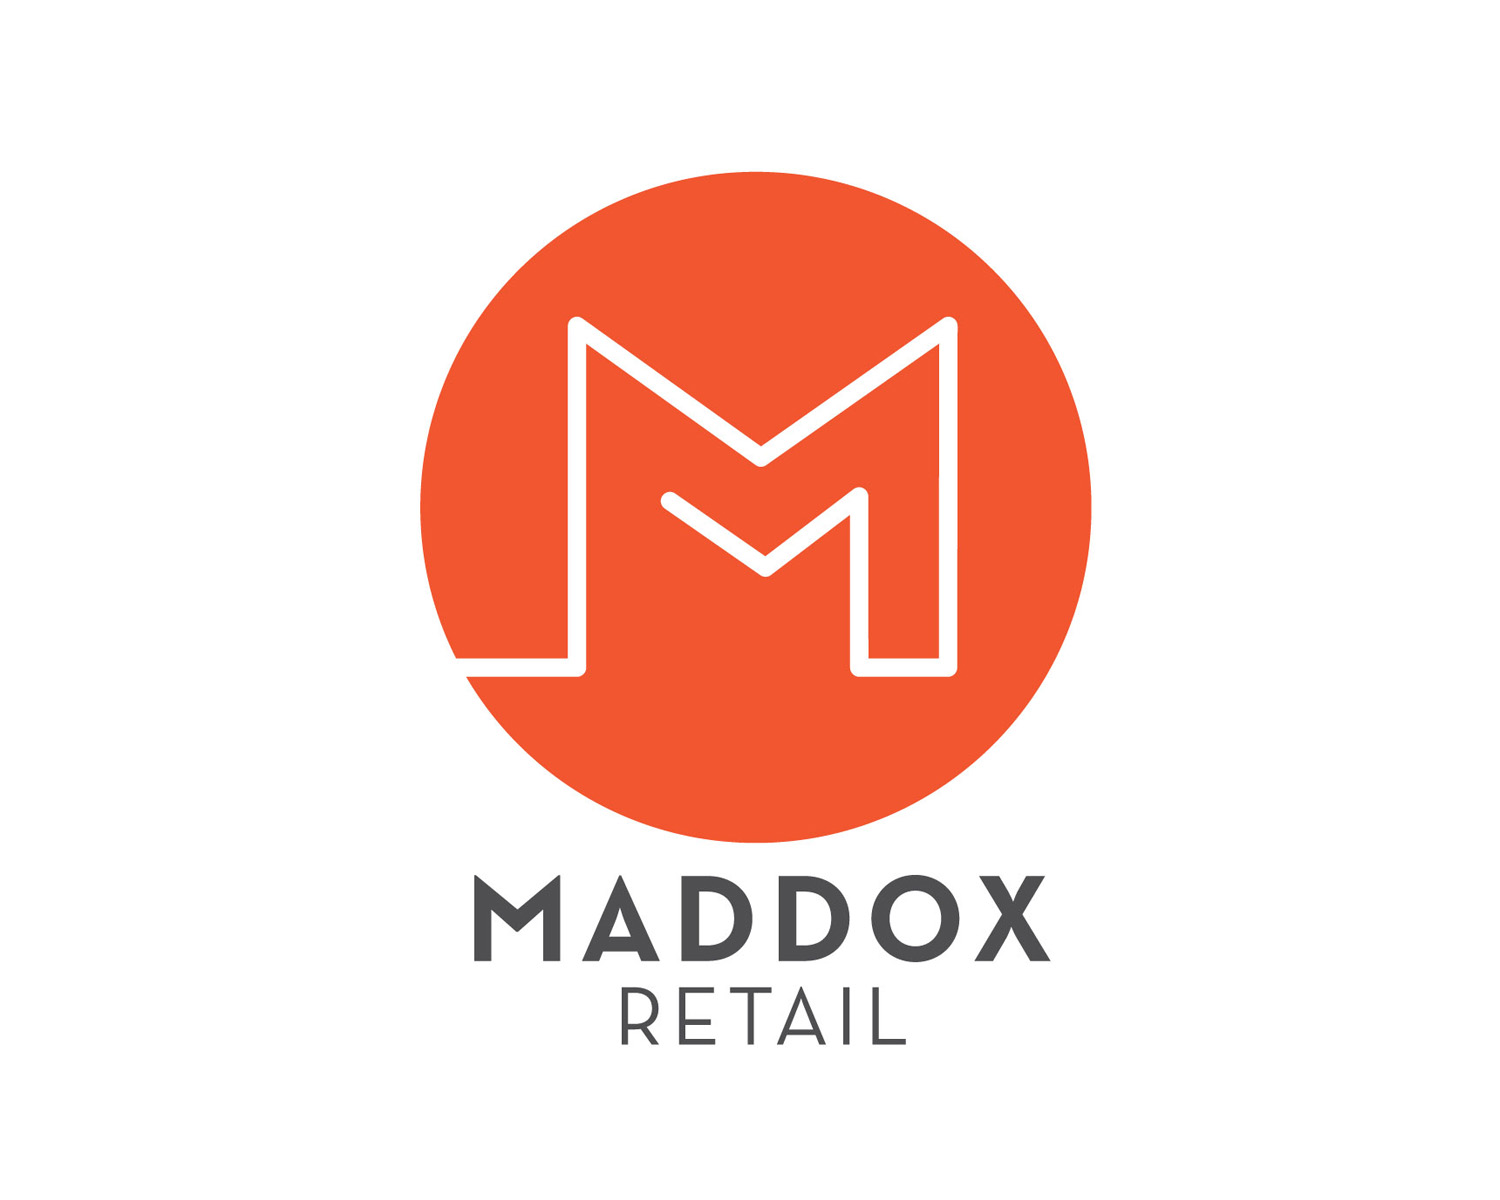 Maddox Retail